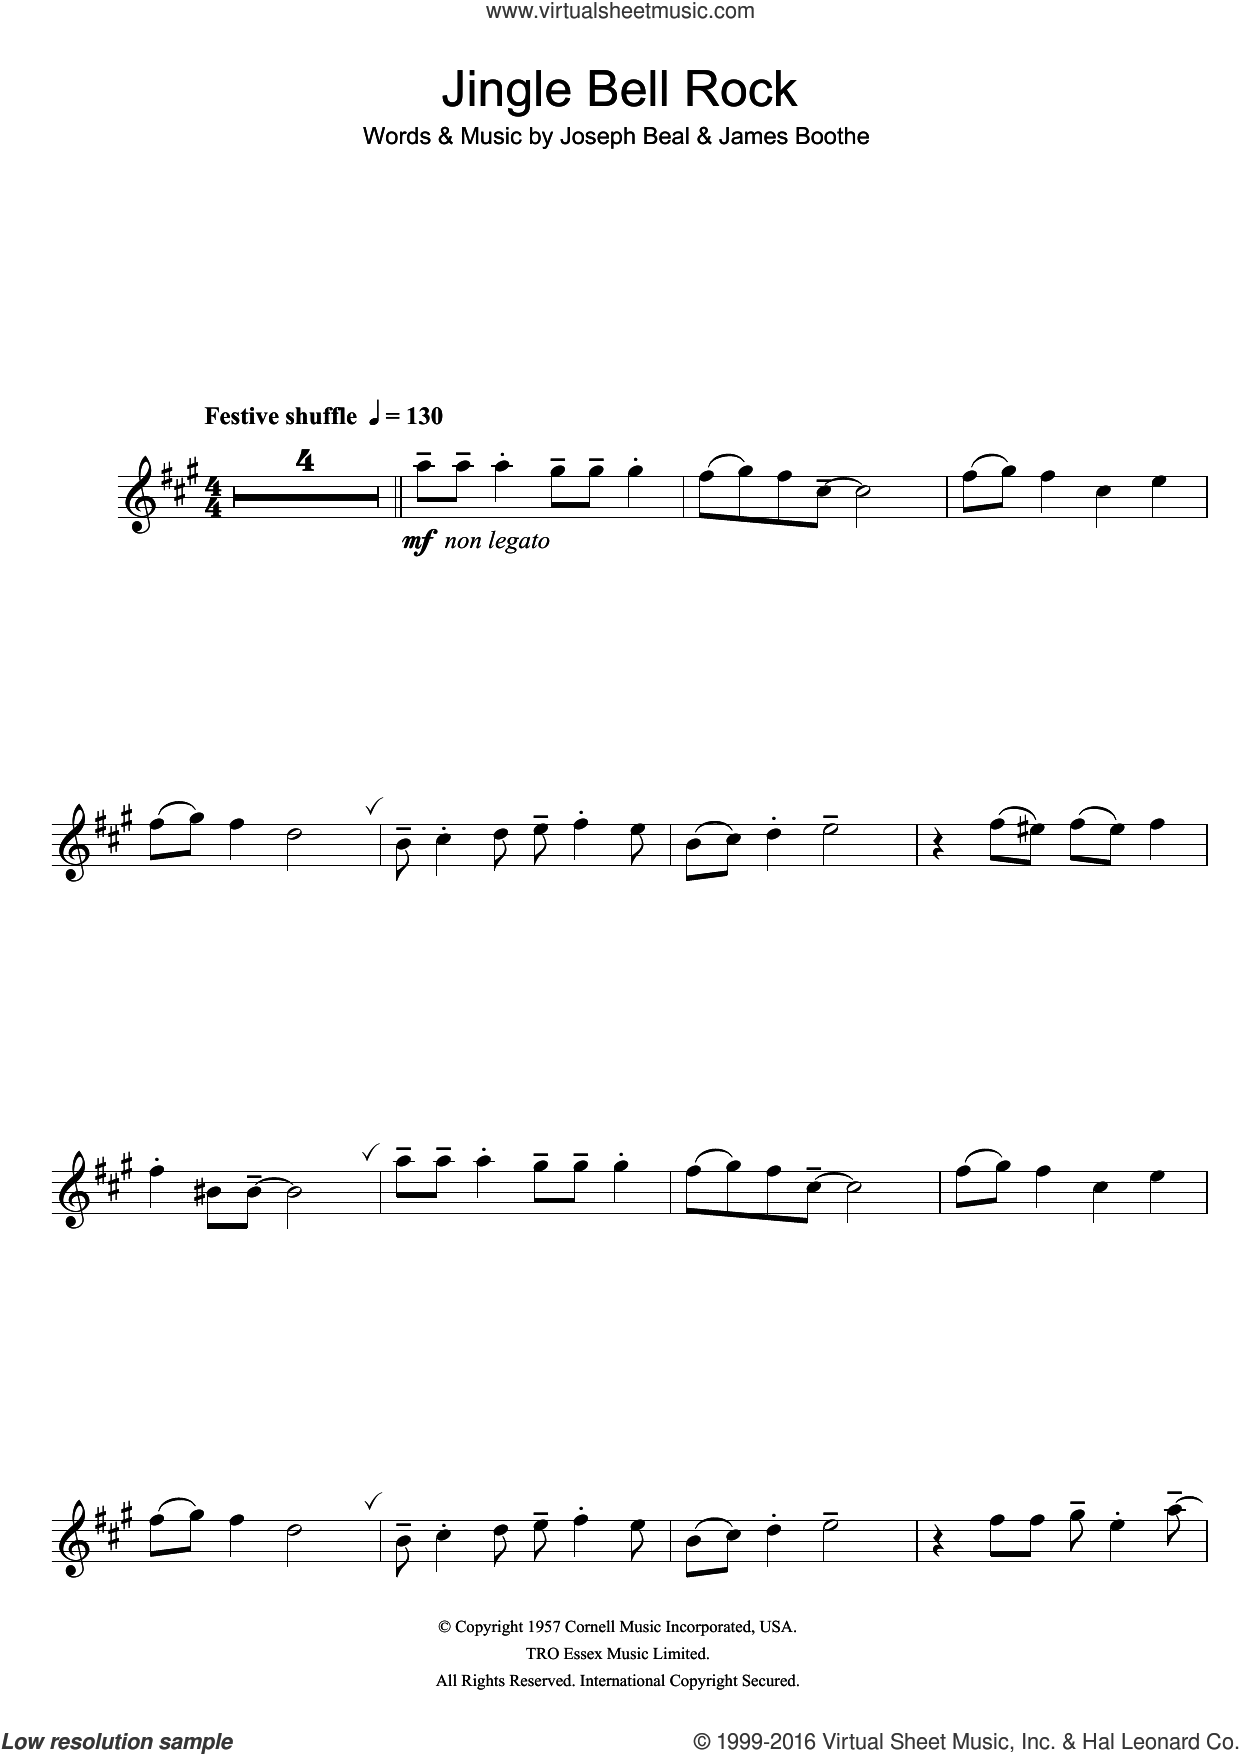 Rick Roll Alto Sax Sheet music for Saxophone alto (Solo)